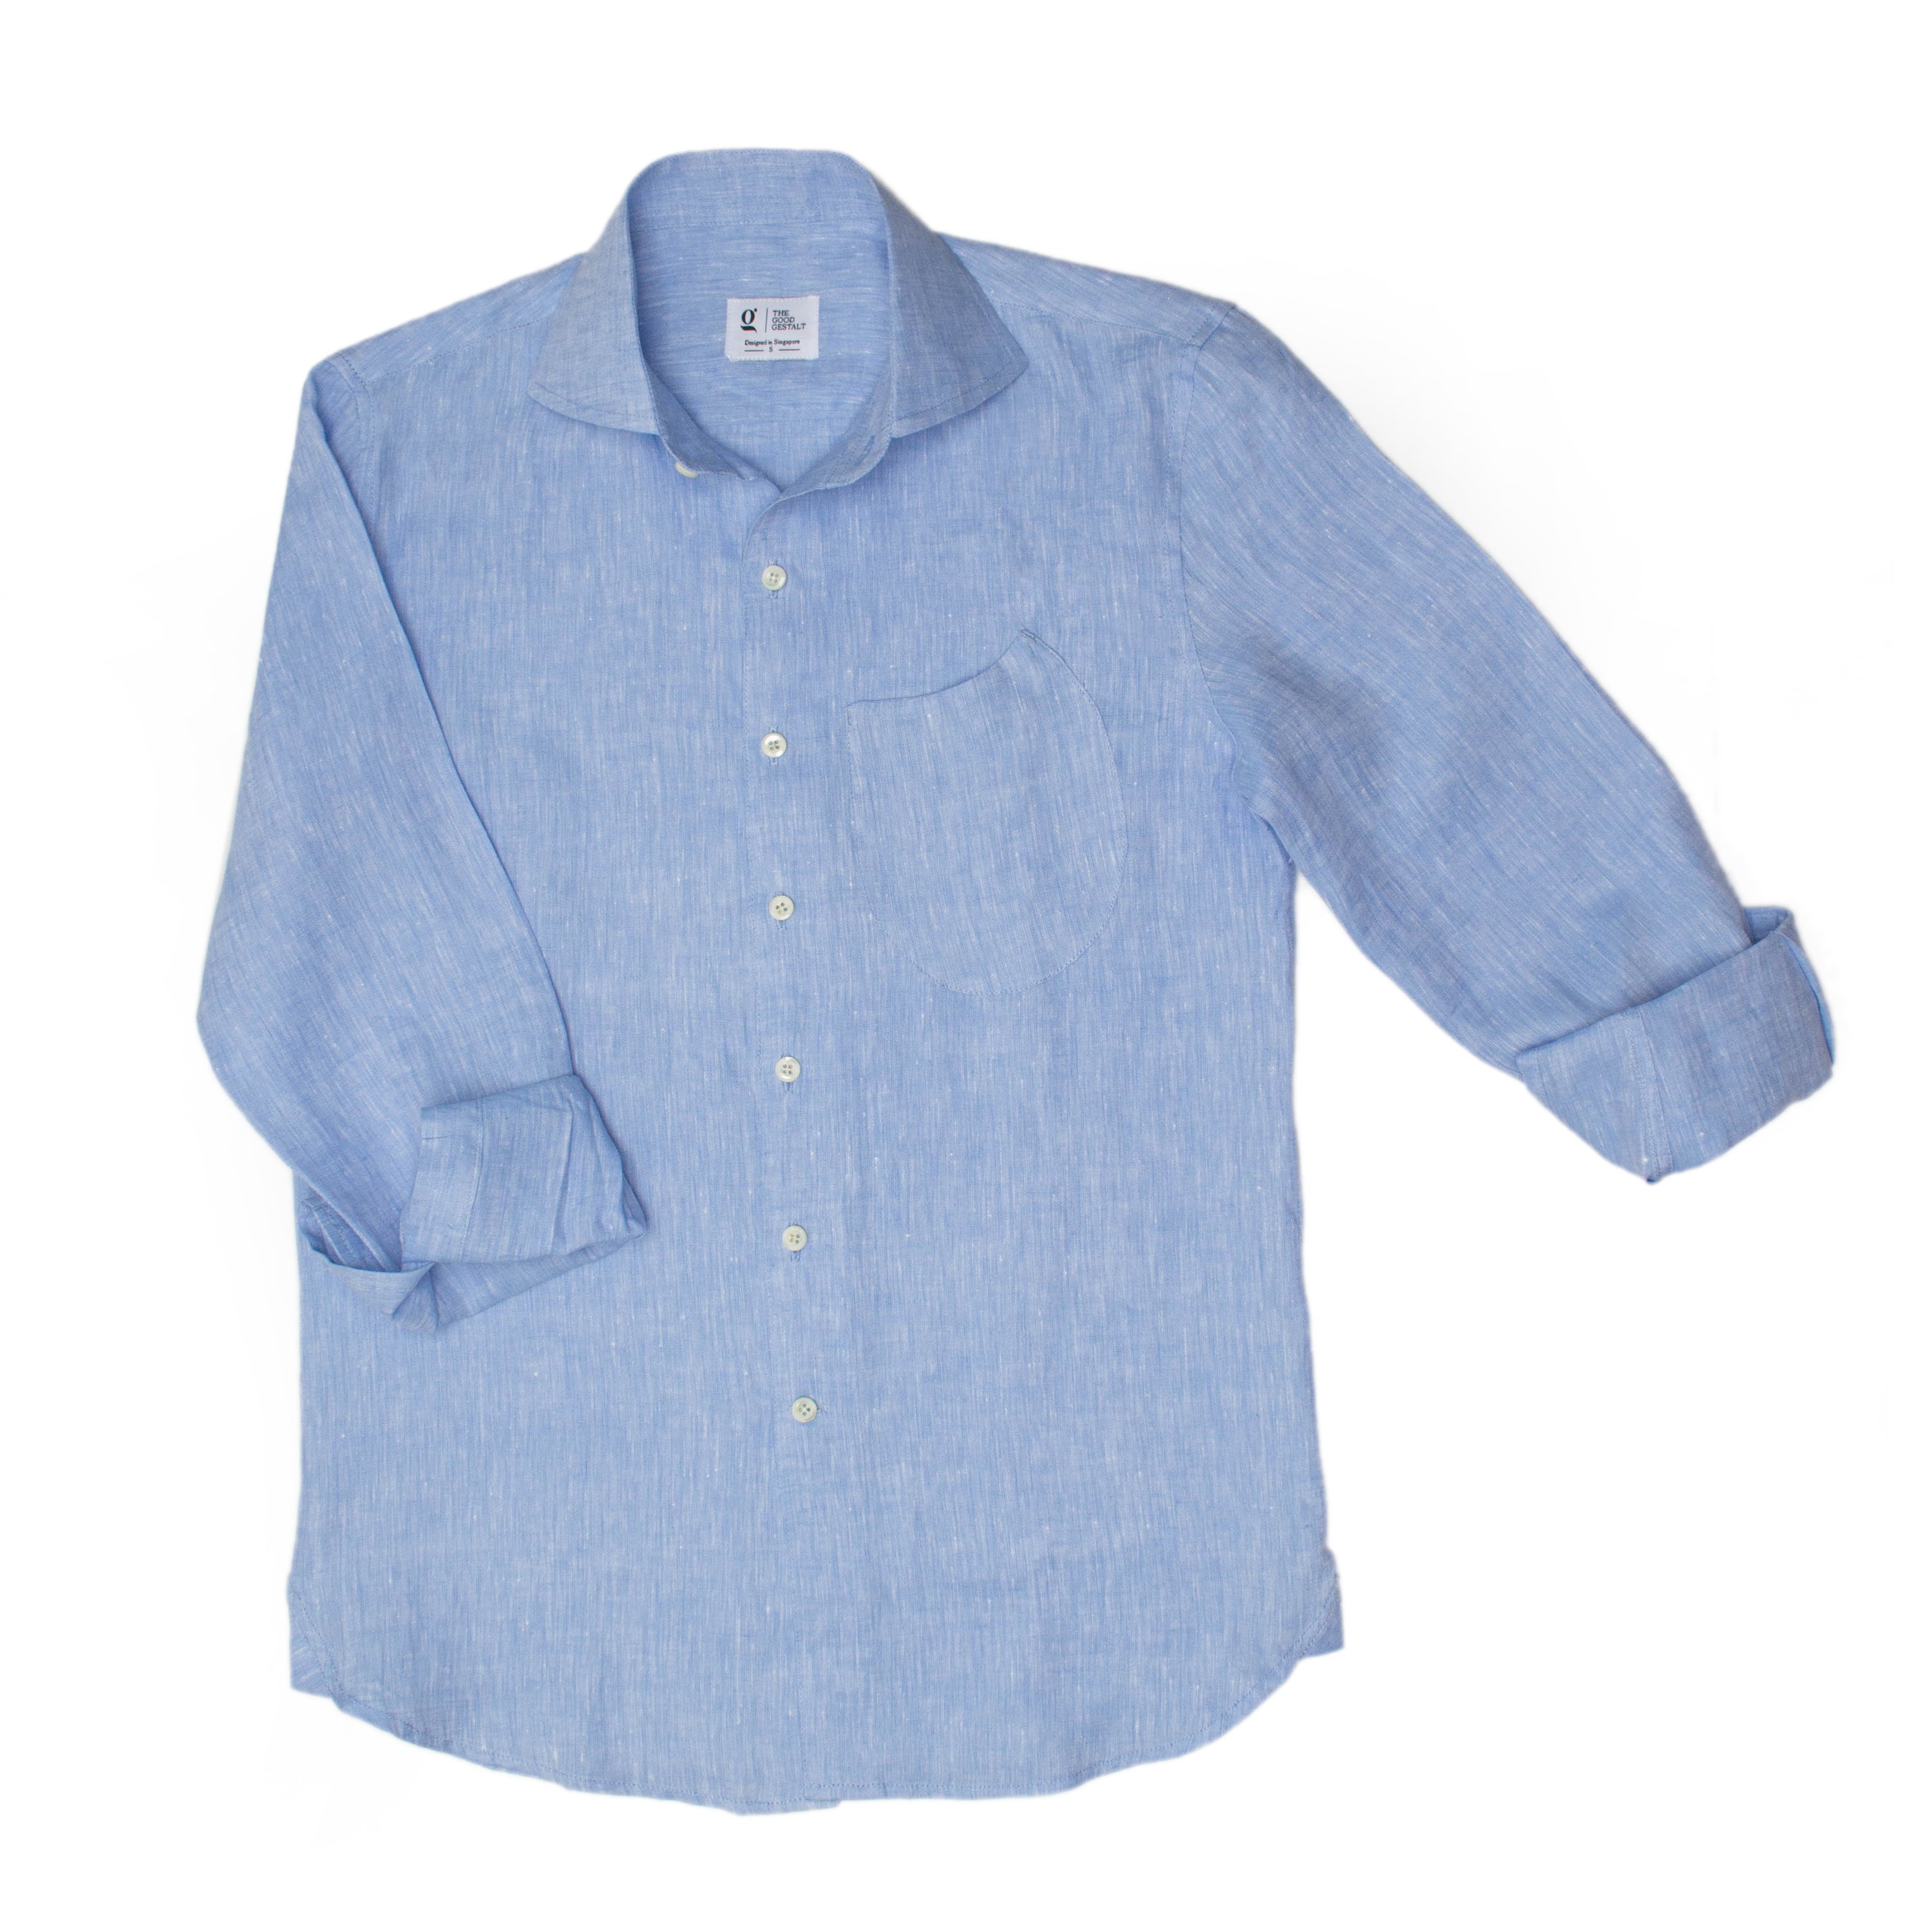 Wine Patch Pocket Shirt in Light Blue Size XL